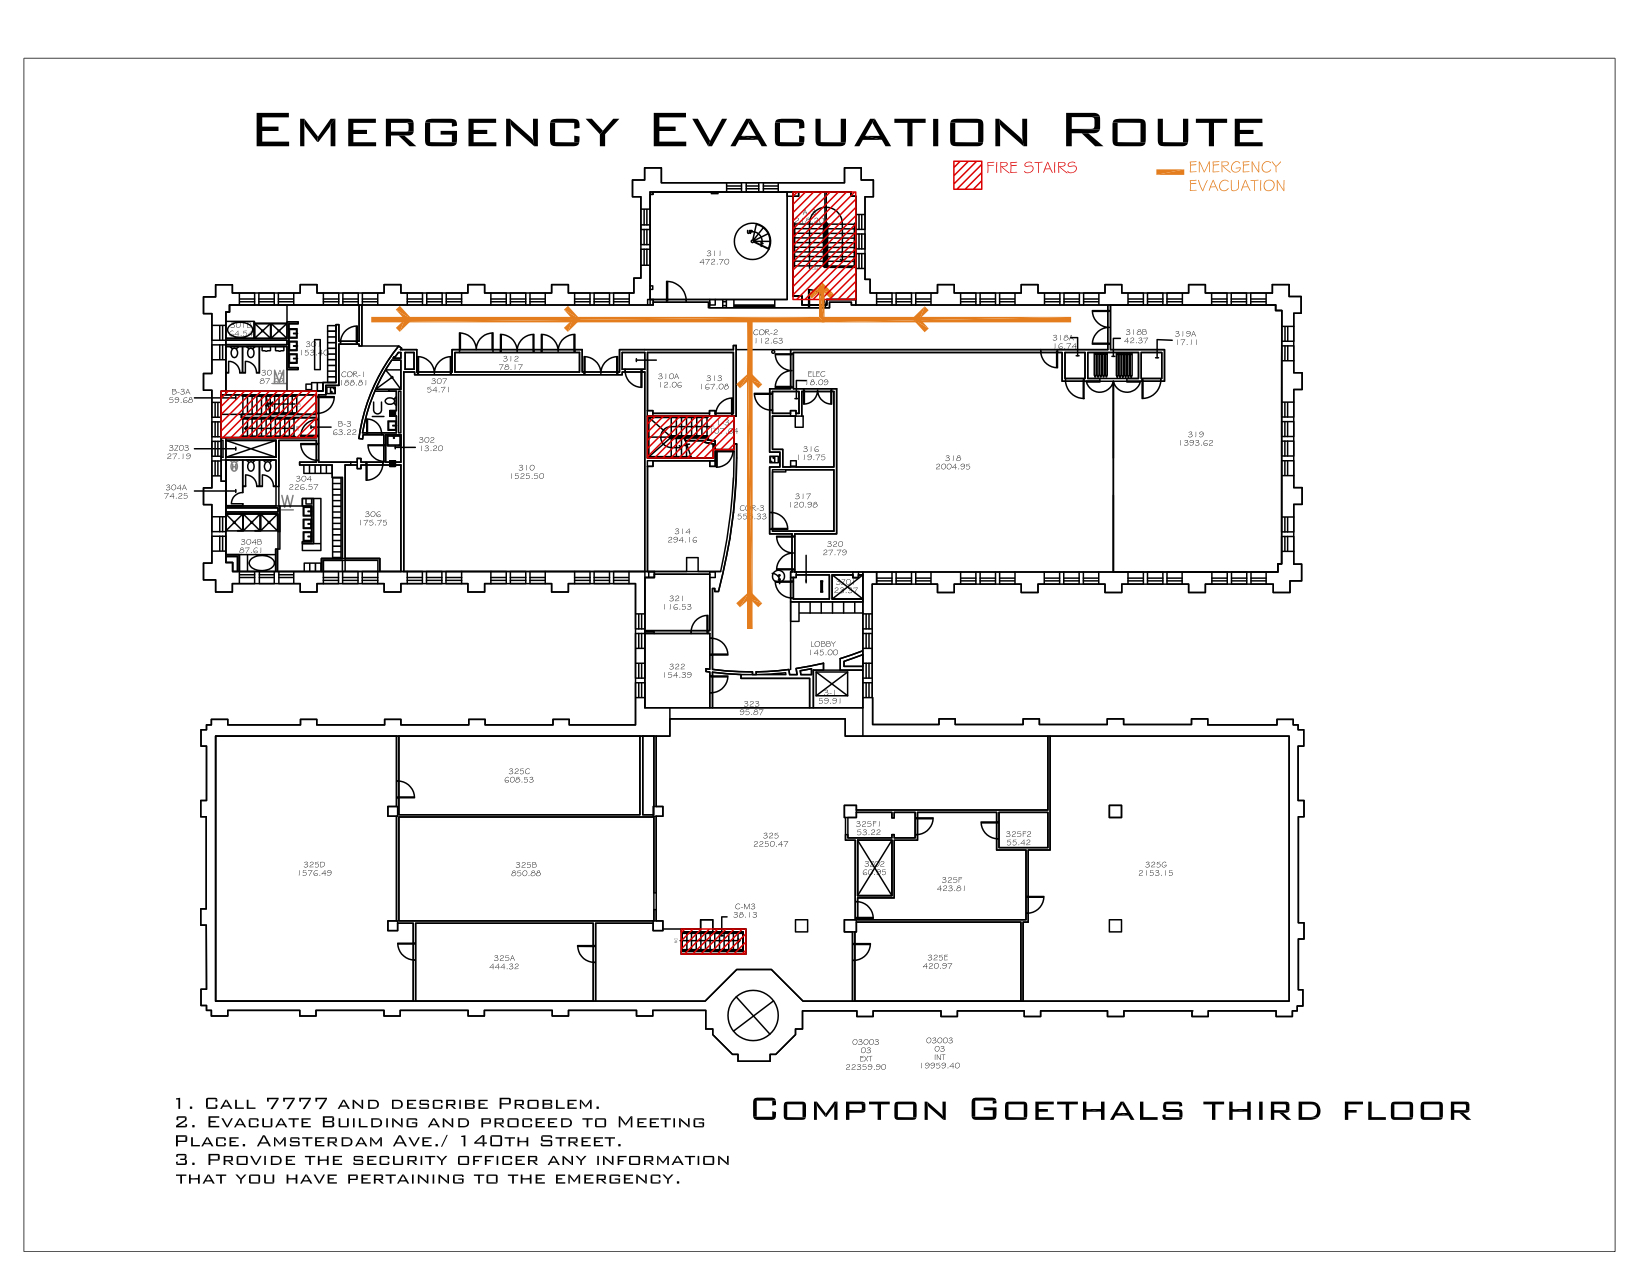 Compton Goethals Hall - Evacuation Routes 7